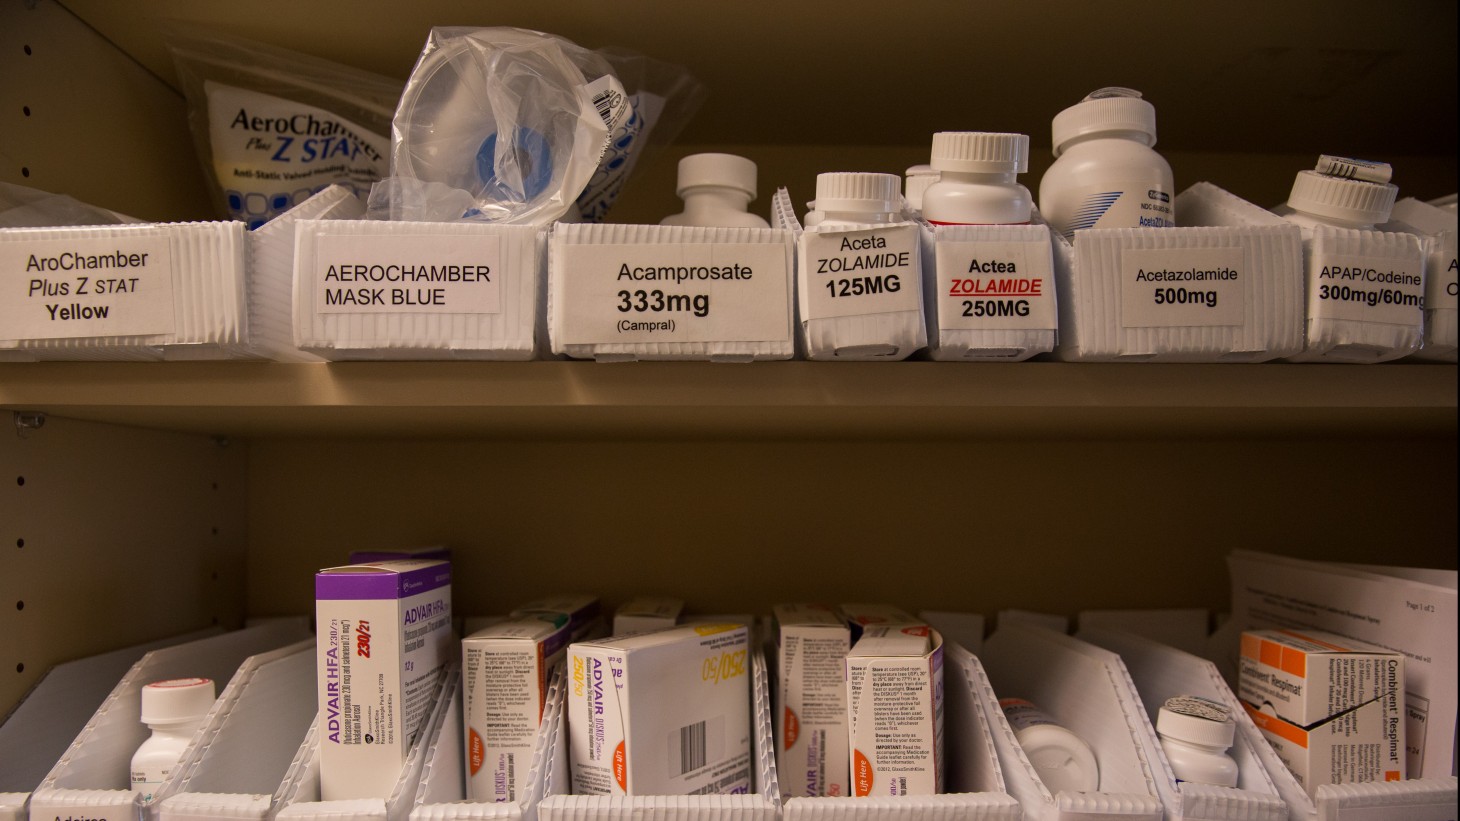 alt="Medication bins at inpatient pharmacy."